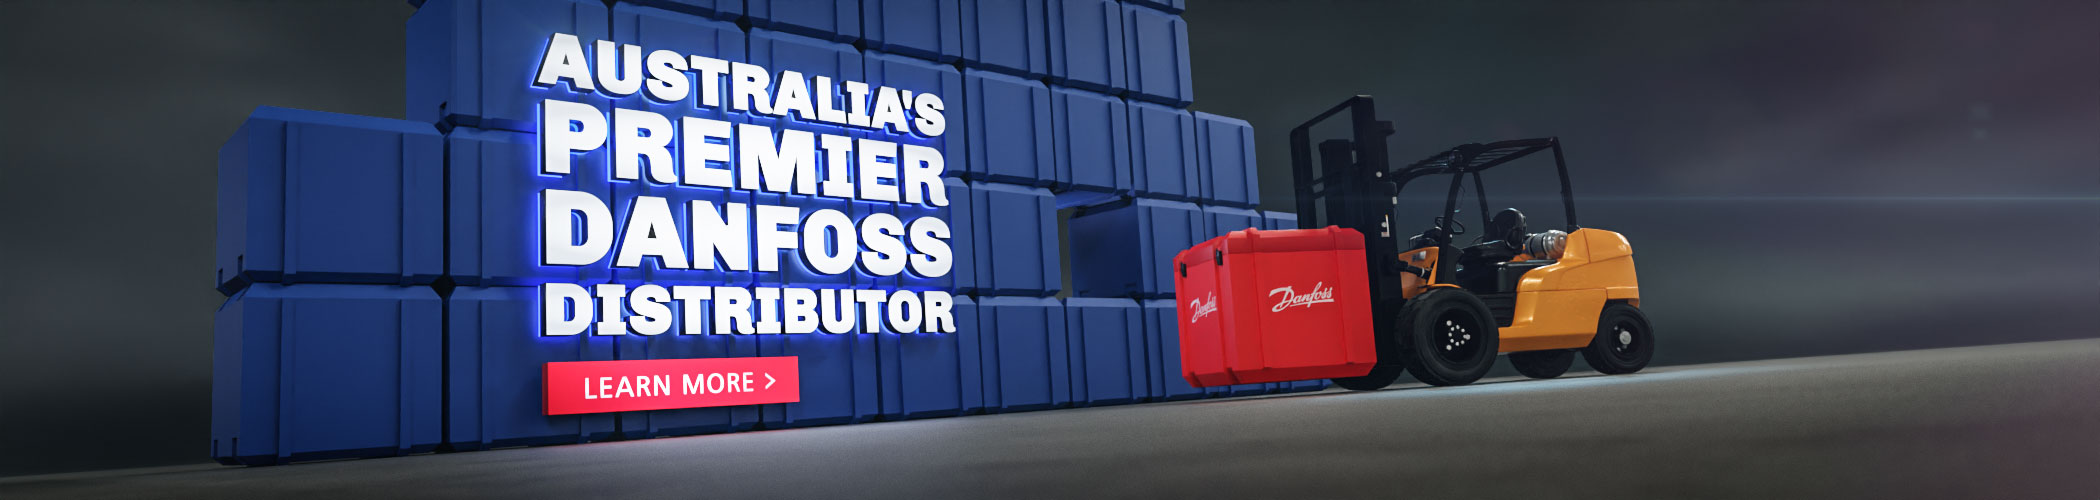 Australia's Premier Danfoss Distributor